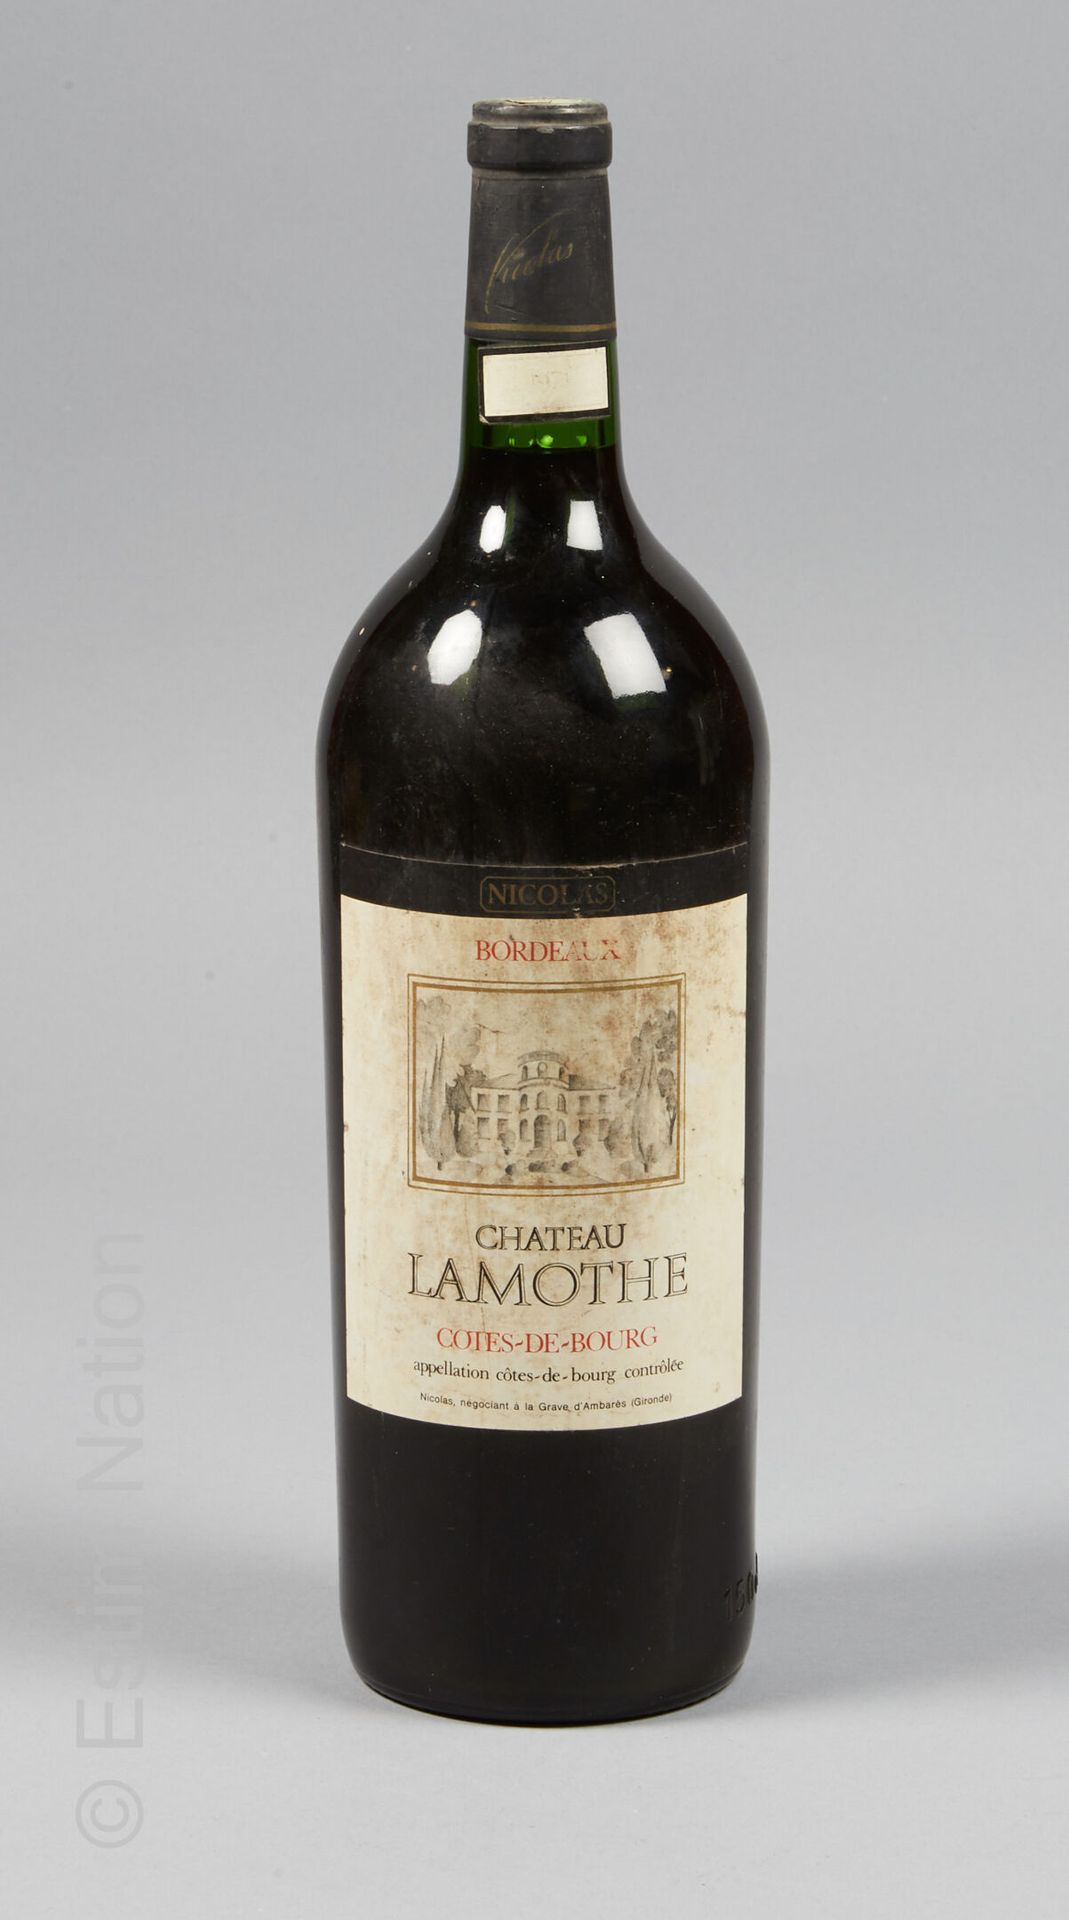 MAGNUM LAMOTHE Magnum Château Lamothe, 1971

Denominación Côtes-de-Bourg contrôl&hellip;